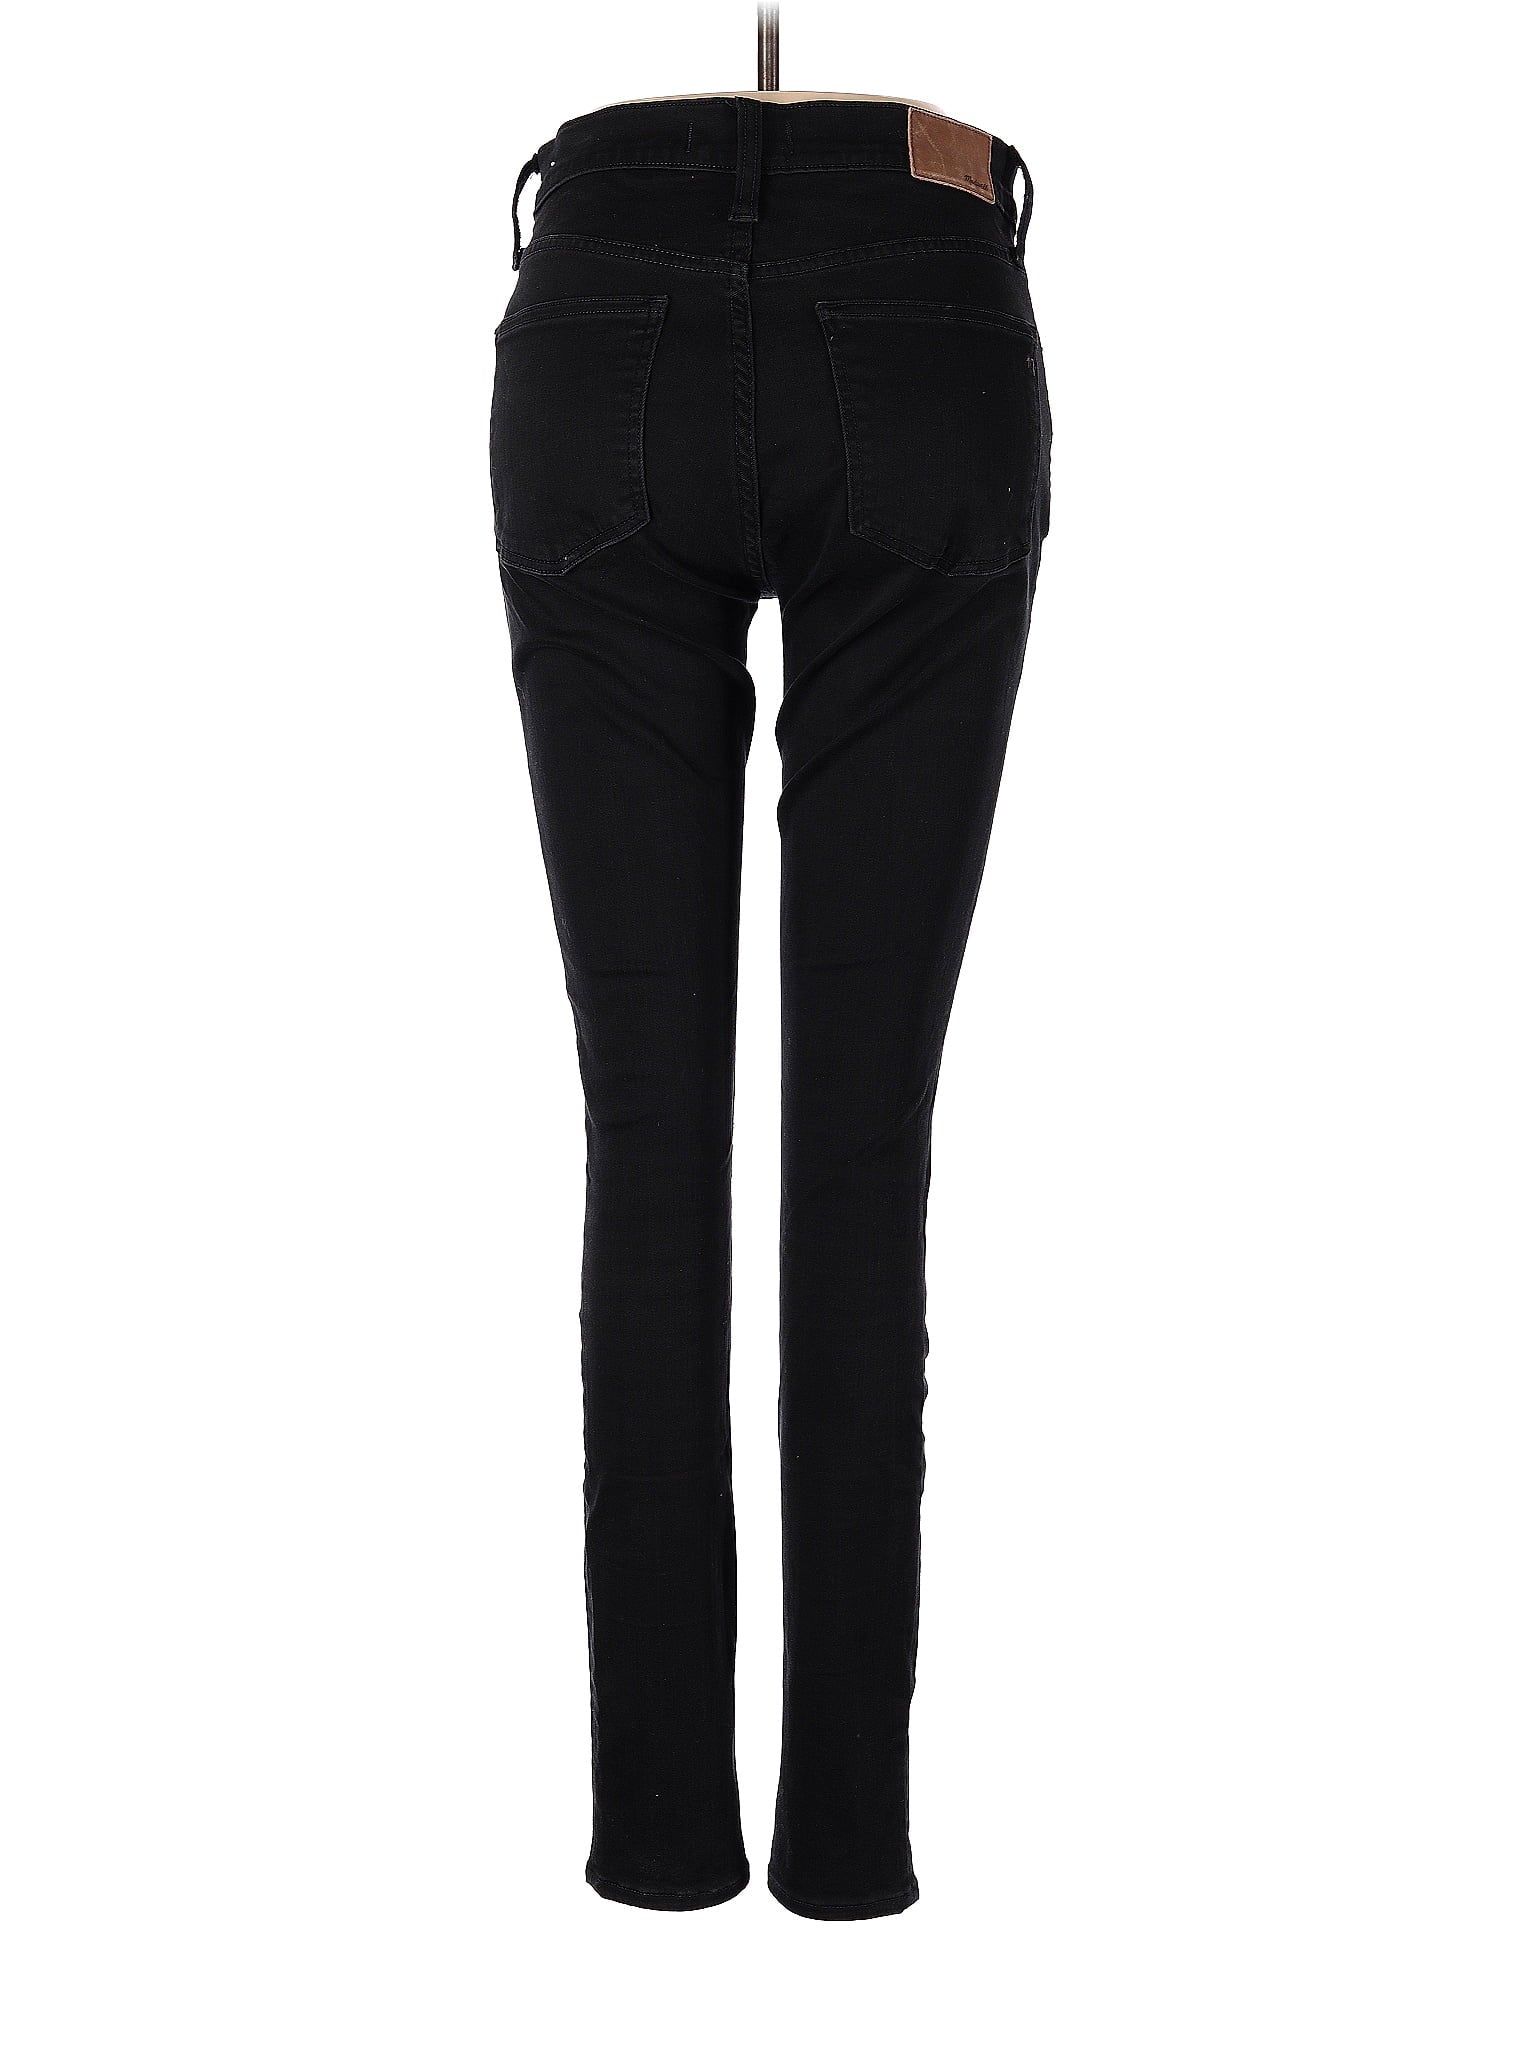 Mid-Rise Boyjeans Jeans in Dark Wash waist size - 28 T